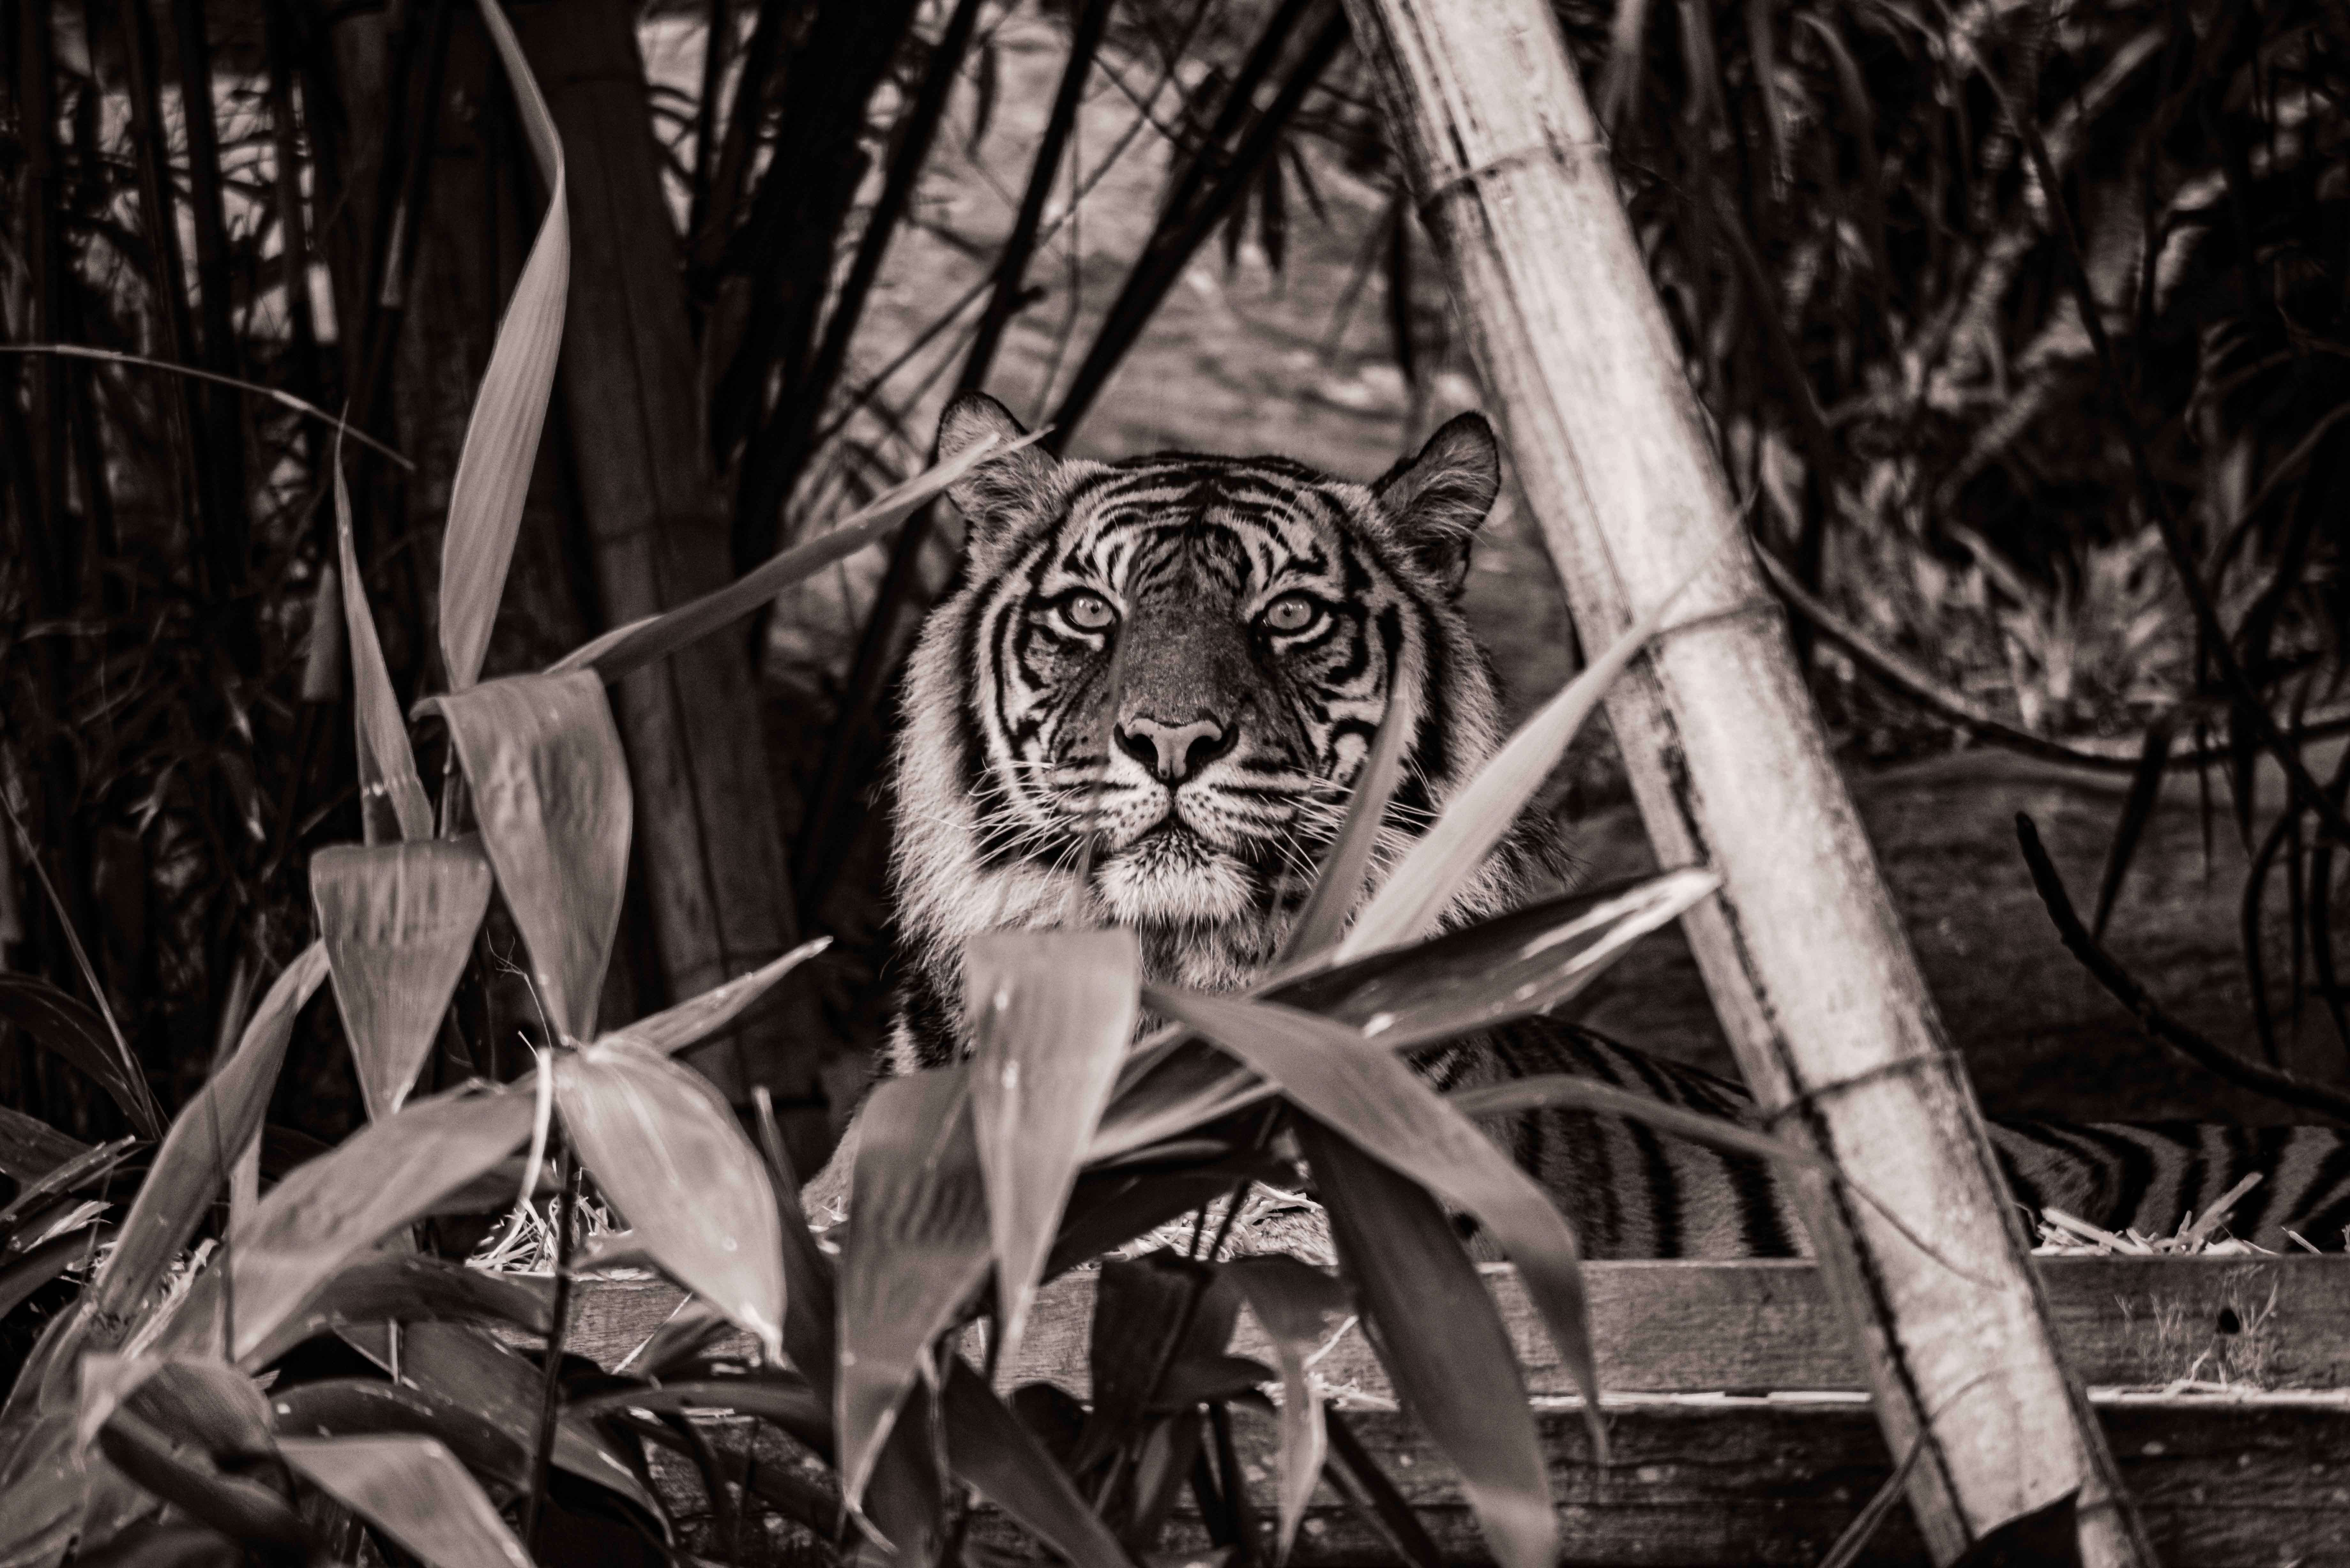 SEMD184 - DSC_7295 Sepia - 
Sumatran Tiger, Taronga Zoo,  Sydney, NSW, Australia.
1st July 2020 - 10.24am
Camera - Nikon D800 
F5.6 - ISO 1000 - 1/125 second - Focal Length 300mm : Wildlife - Sepia : Stephen E-Moran - Fine Art Photography